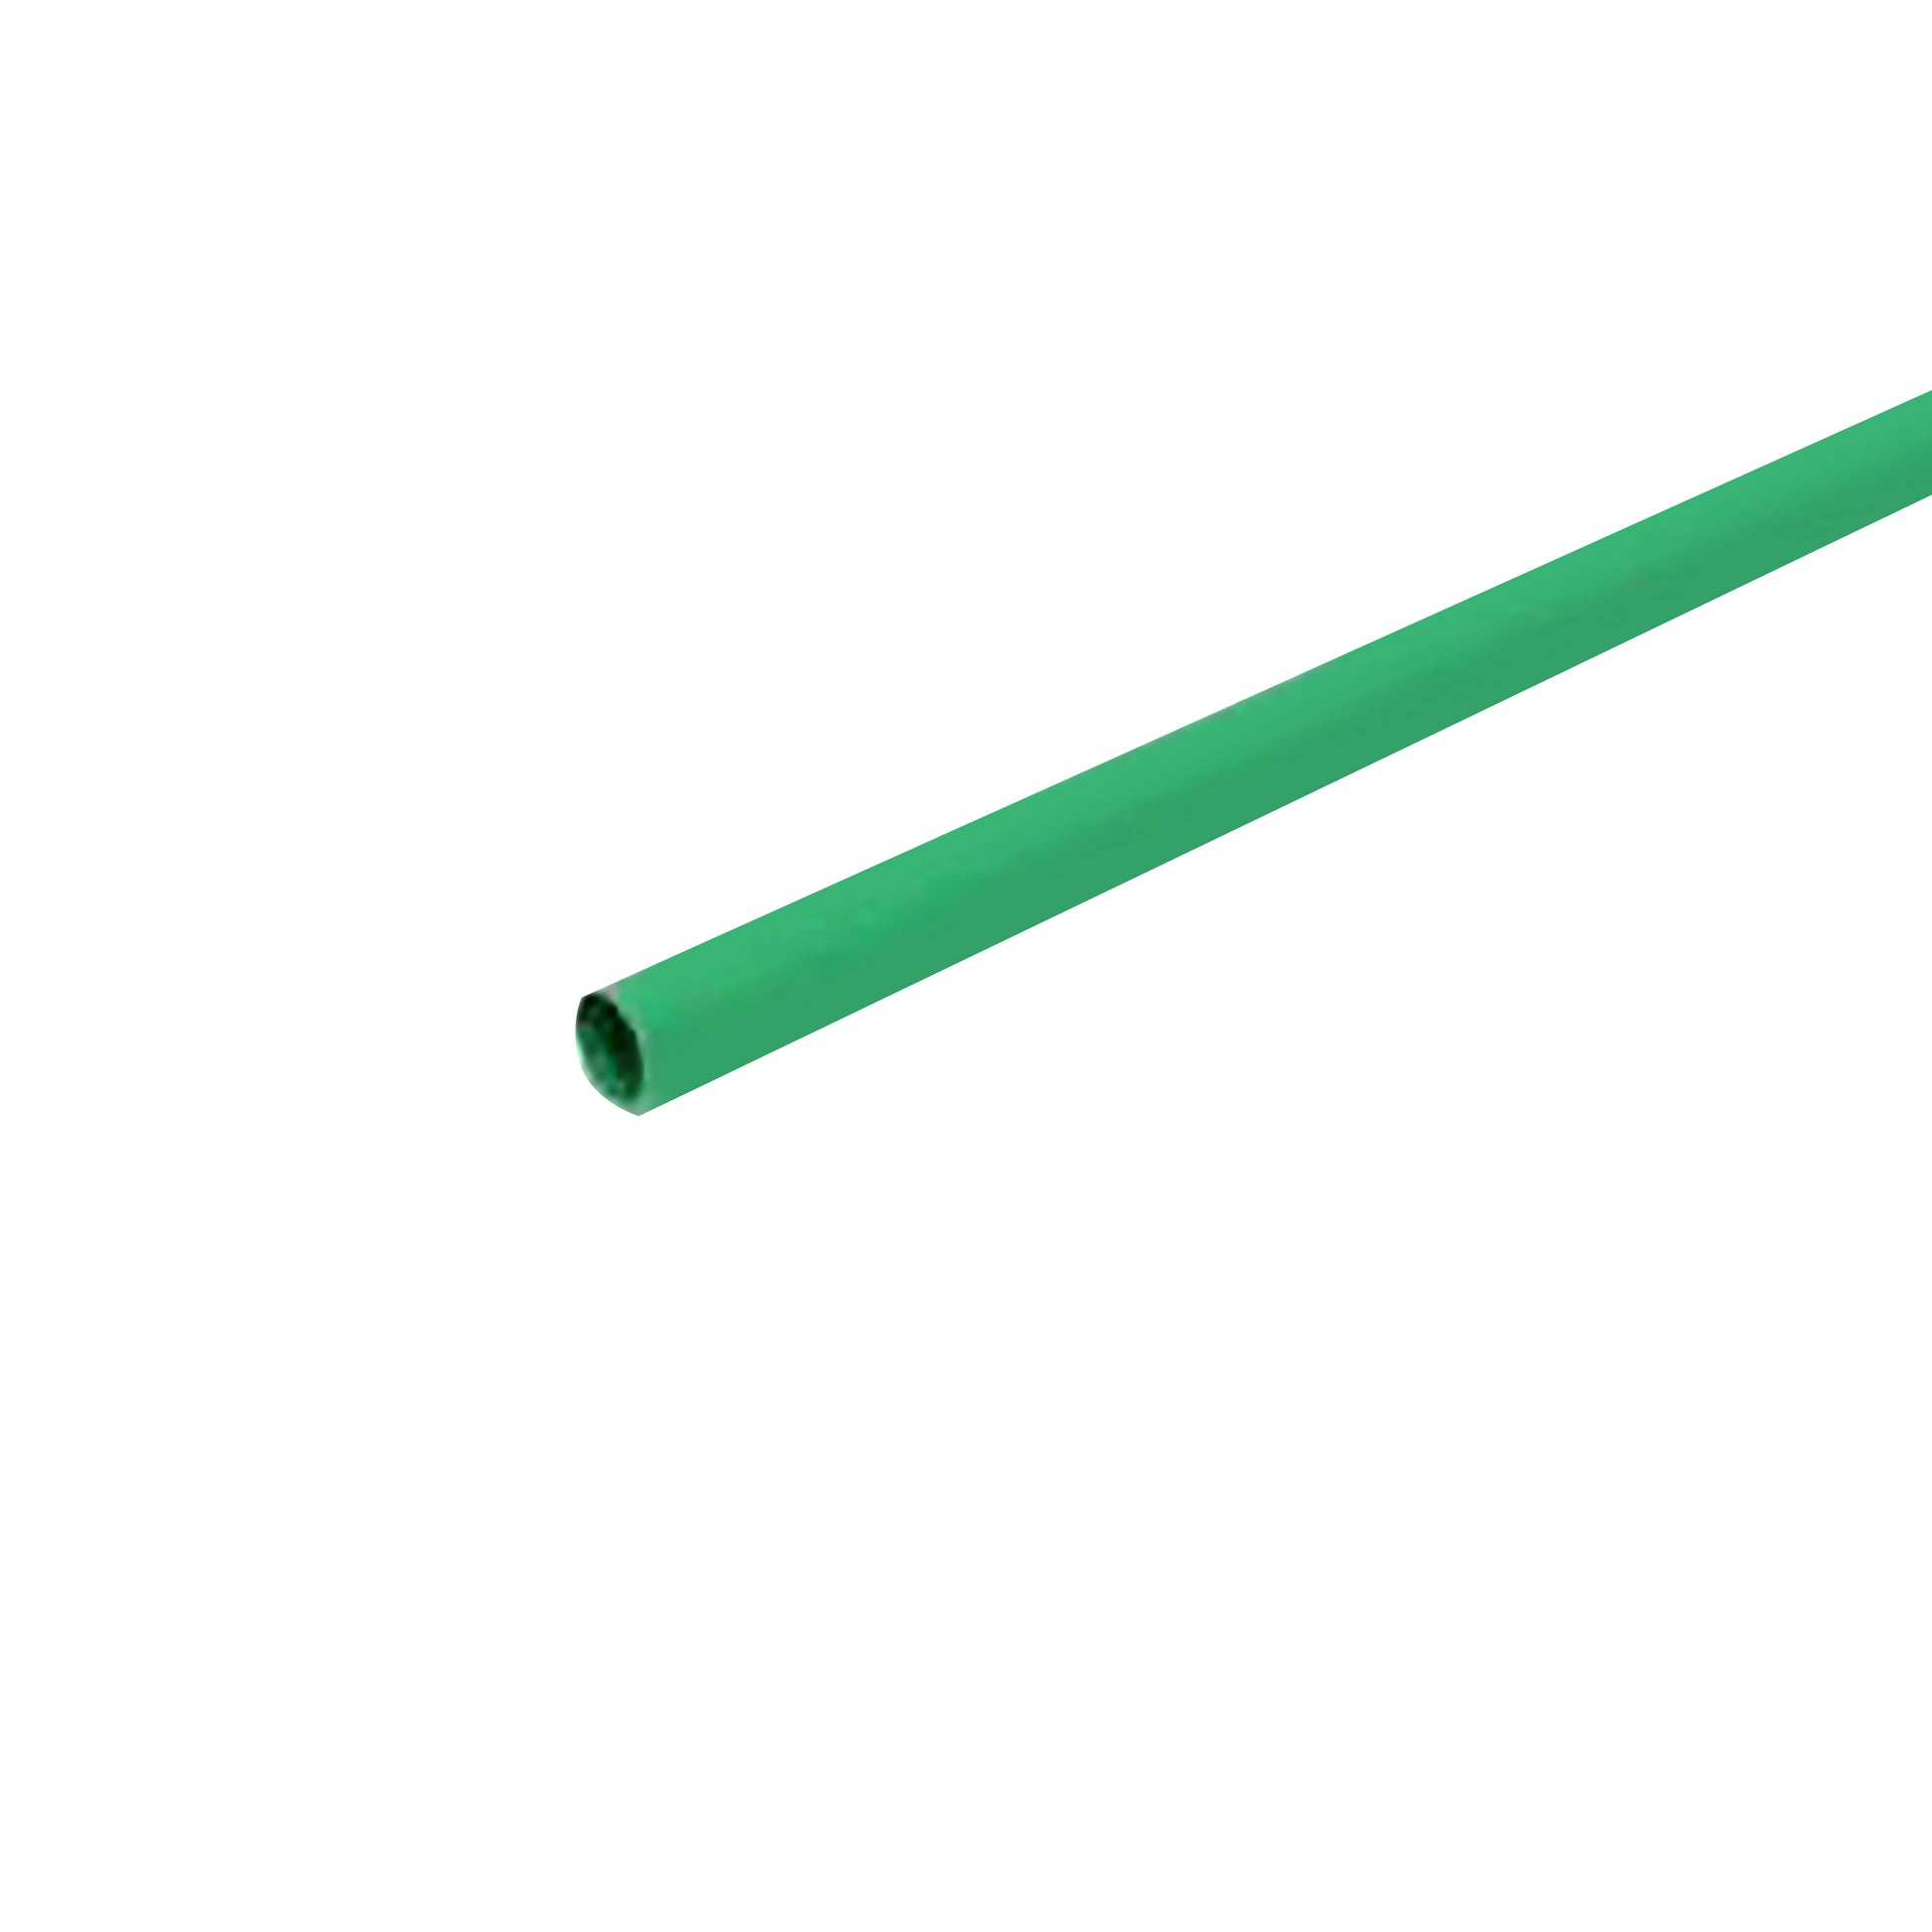 Flexible Thin Single Wall Non-Adhesive Heat Shrink Tubing 2:1 Green 1/8" ID - 25' Ft Spool